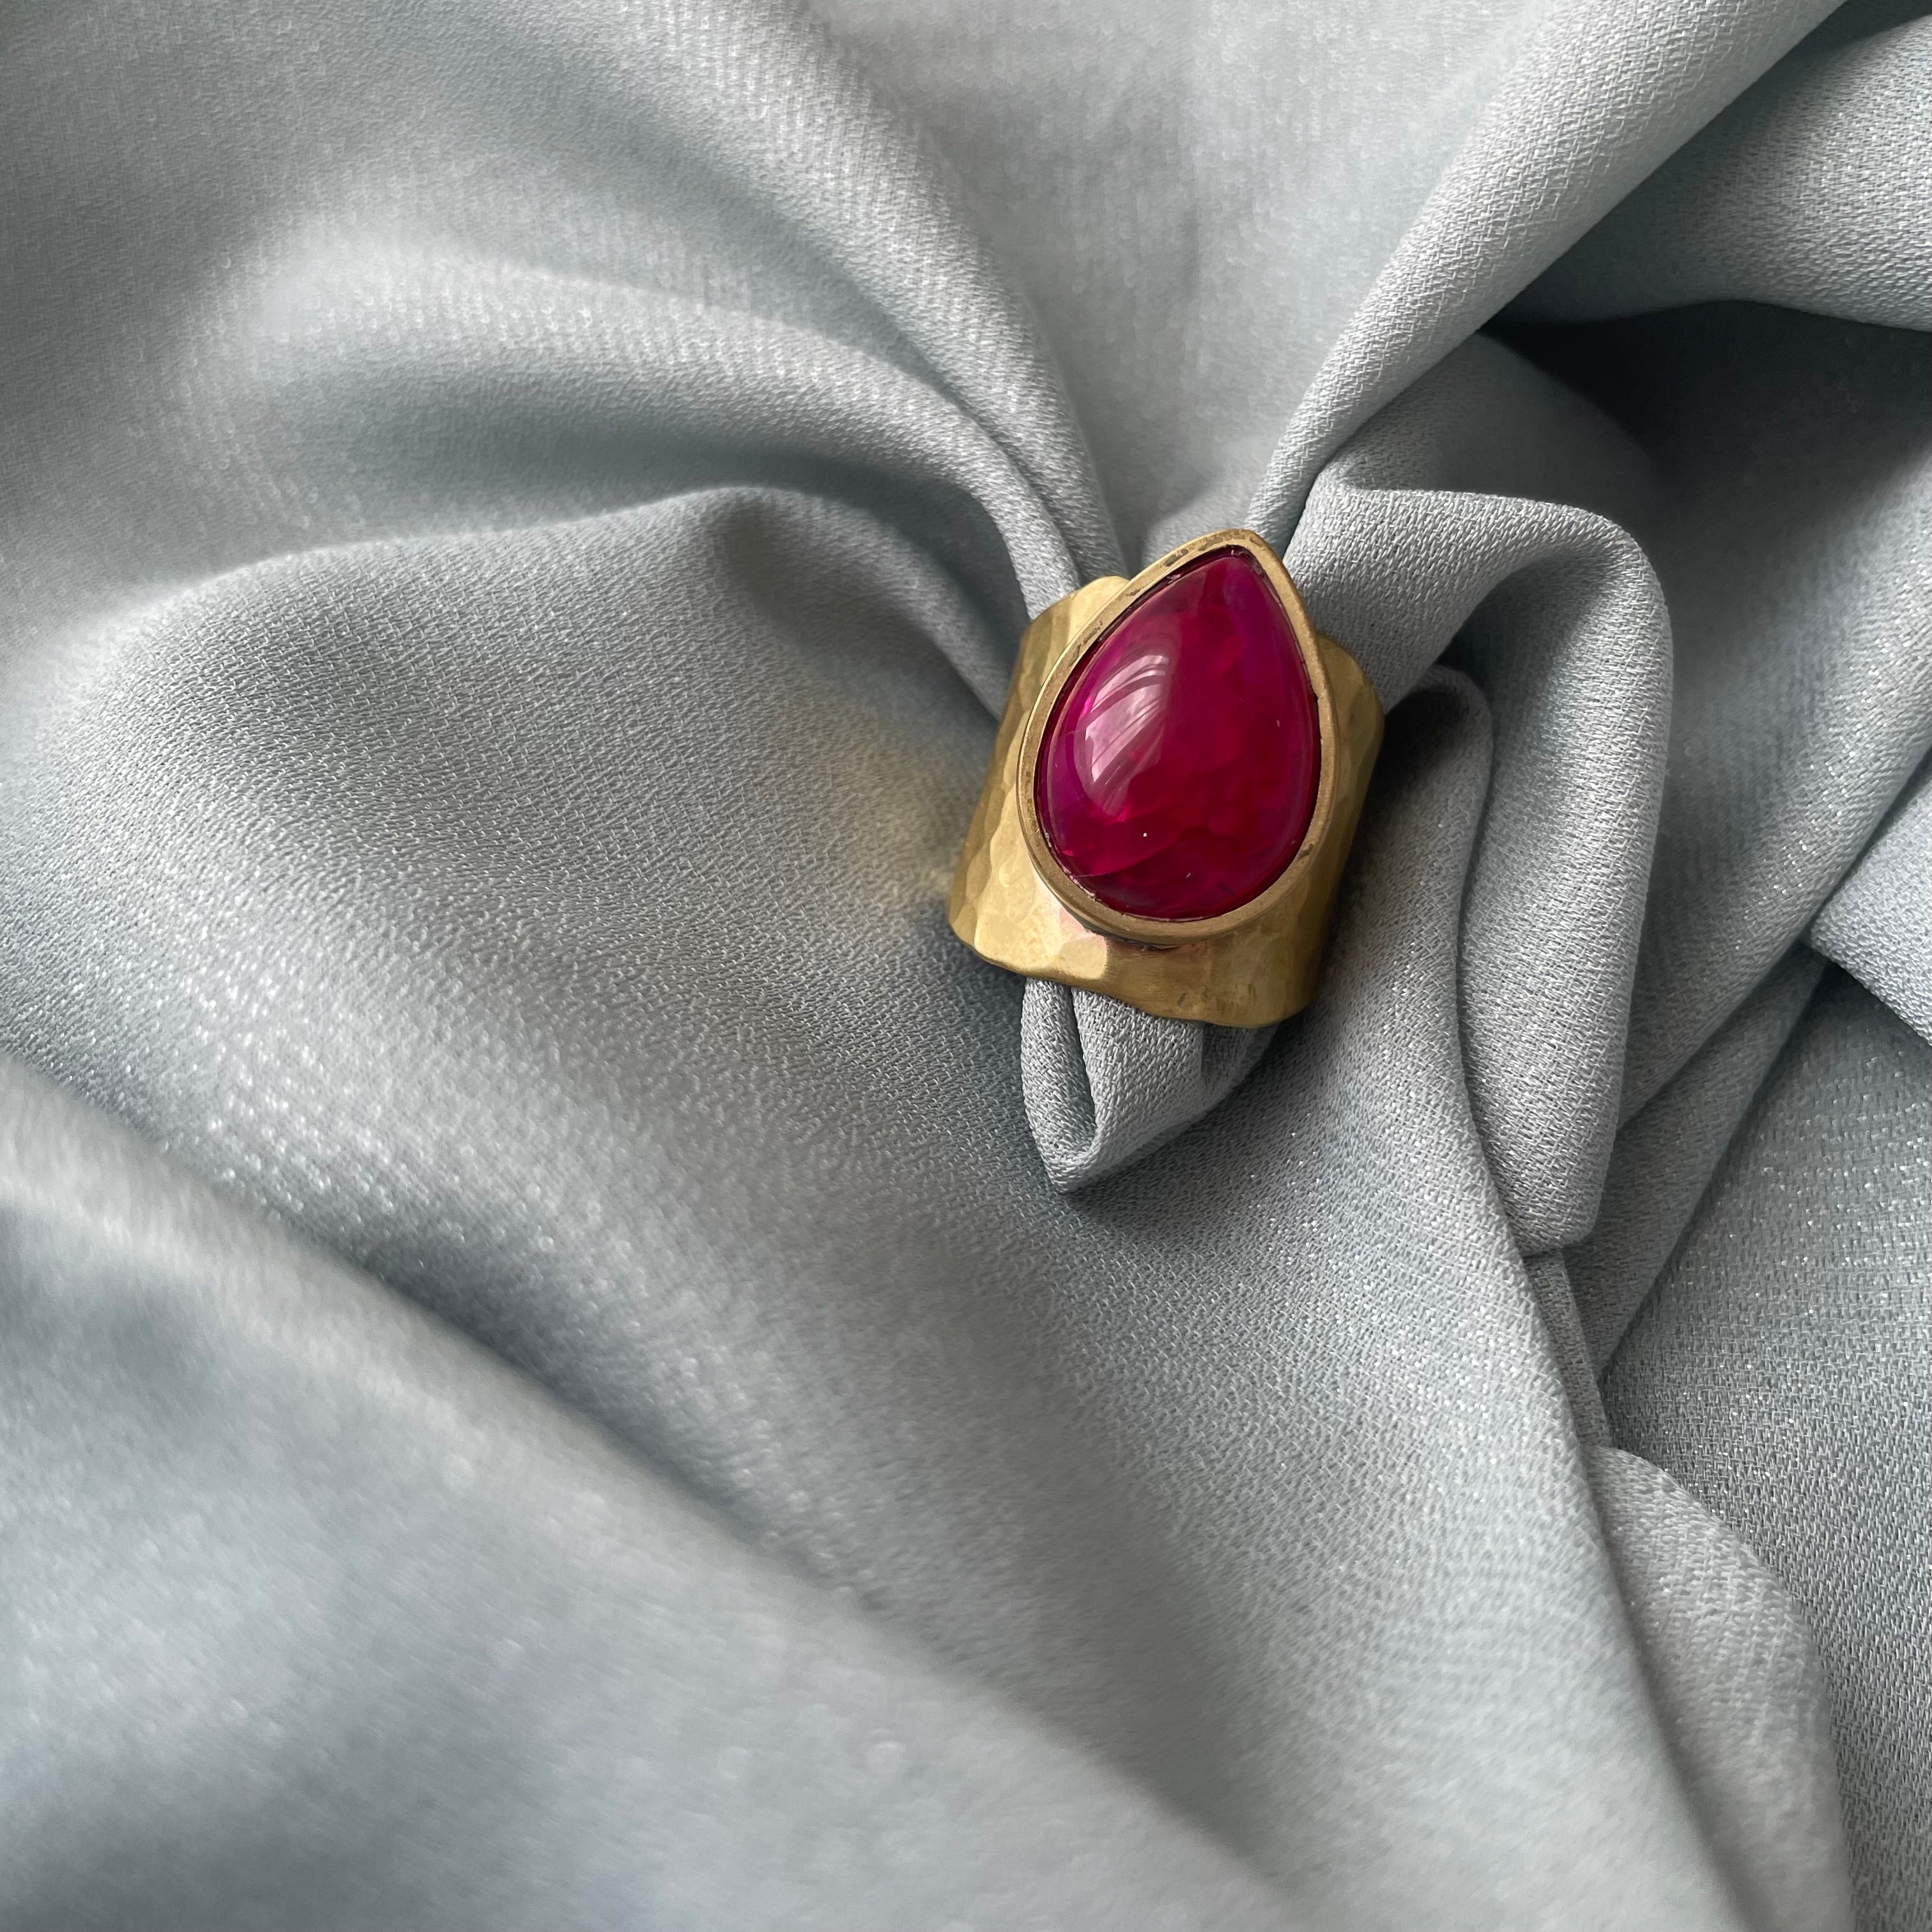 Brass Handmade Ring with Teardrop Shaped Raspberry Colored Gemstone